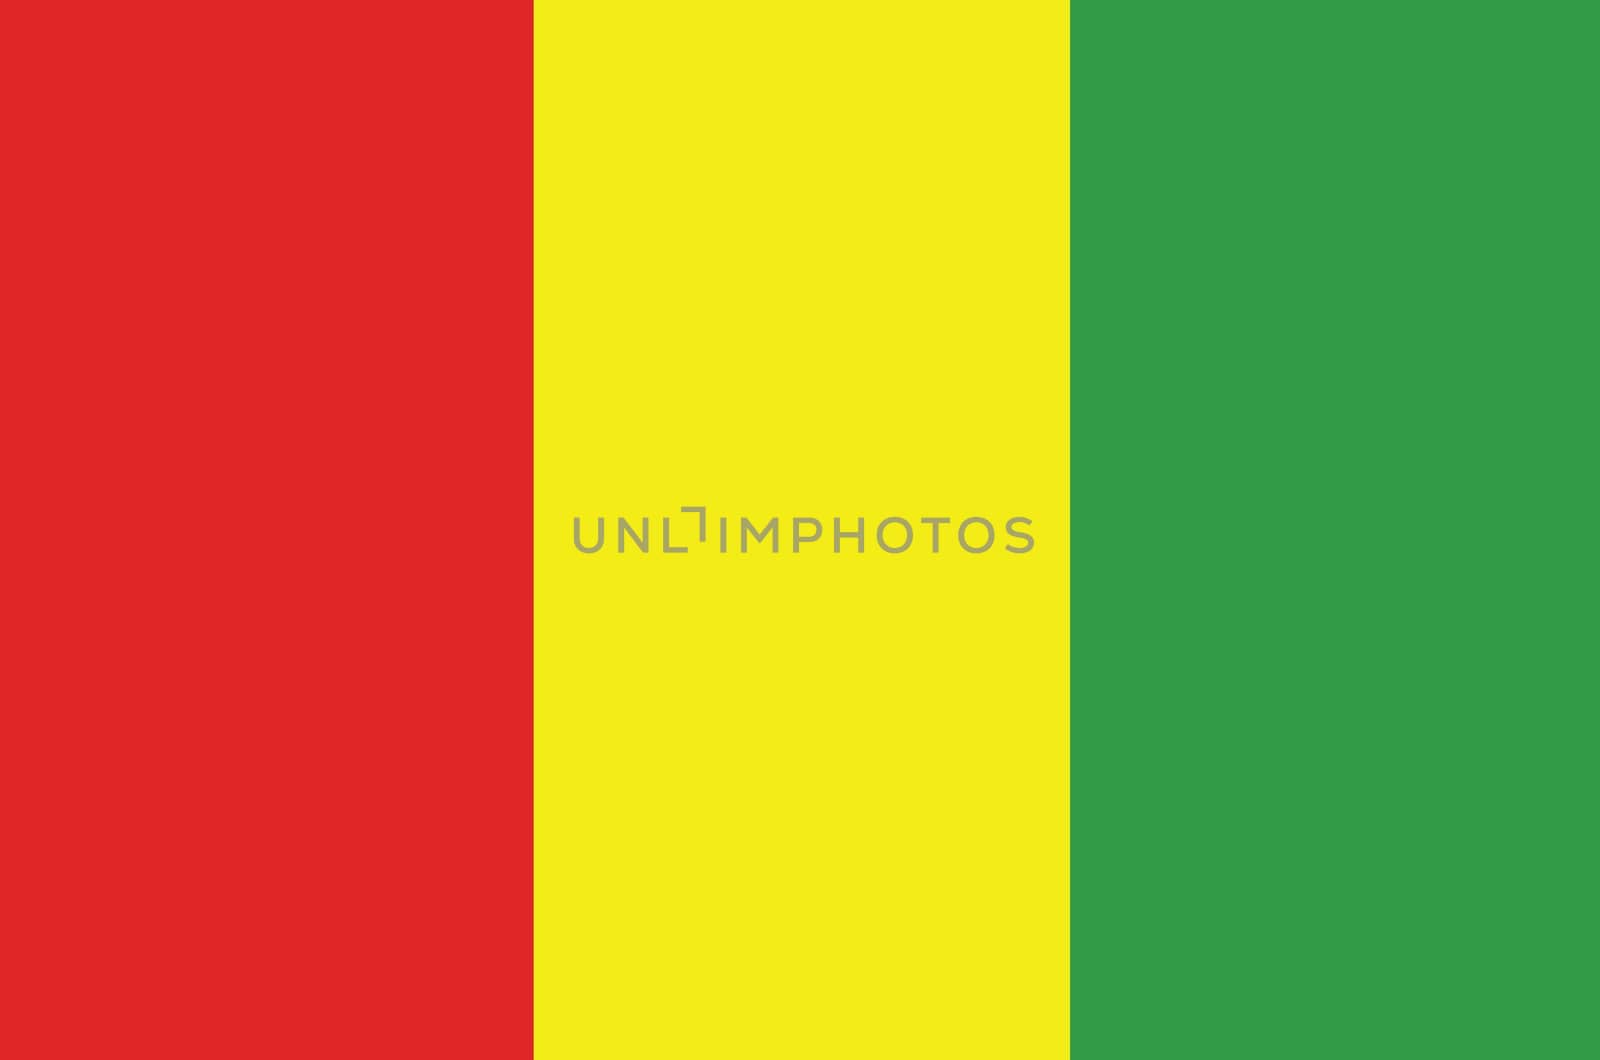 national flag of Guinea by vospalej